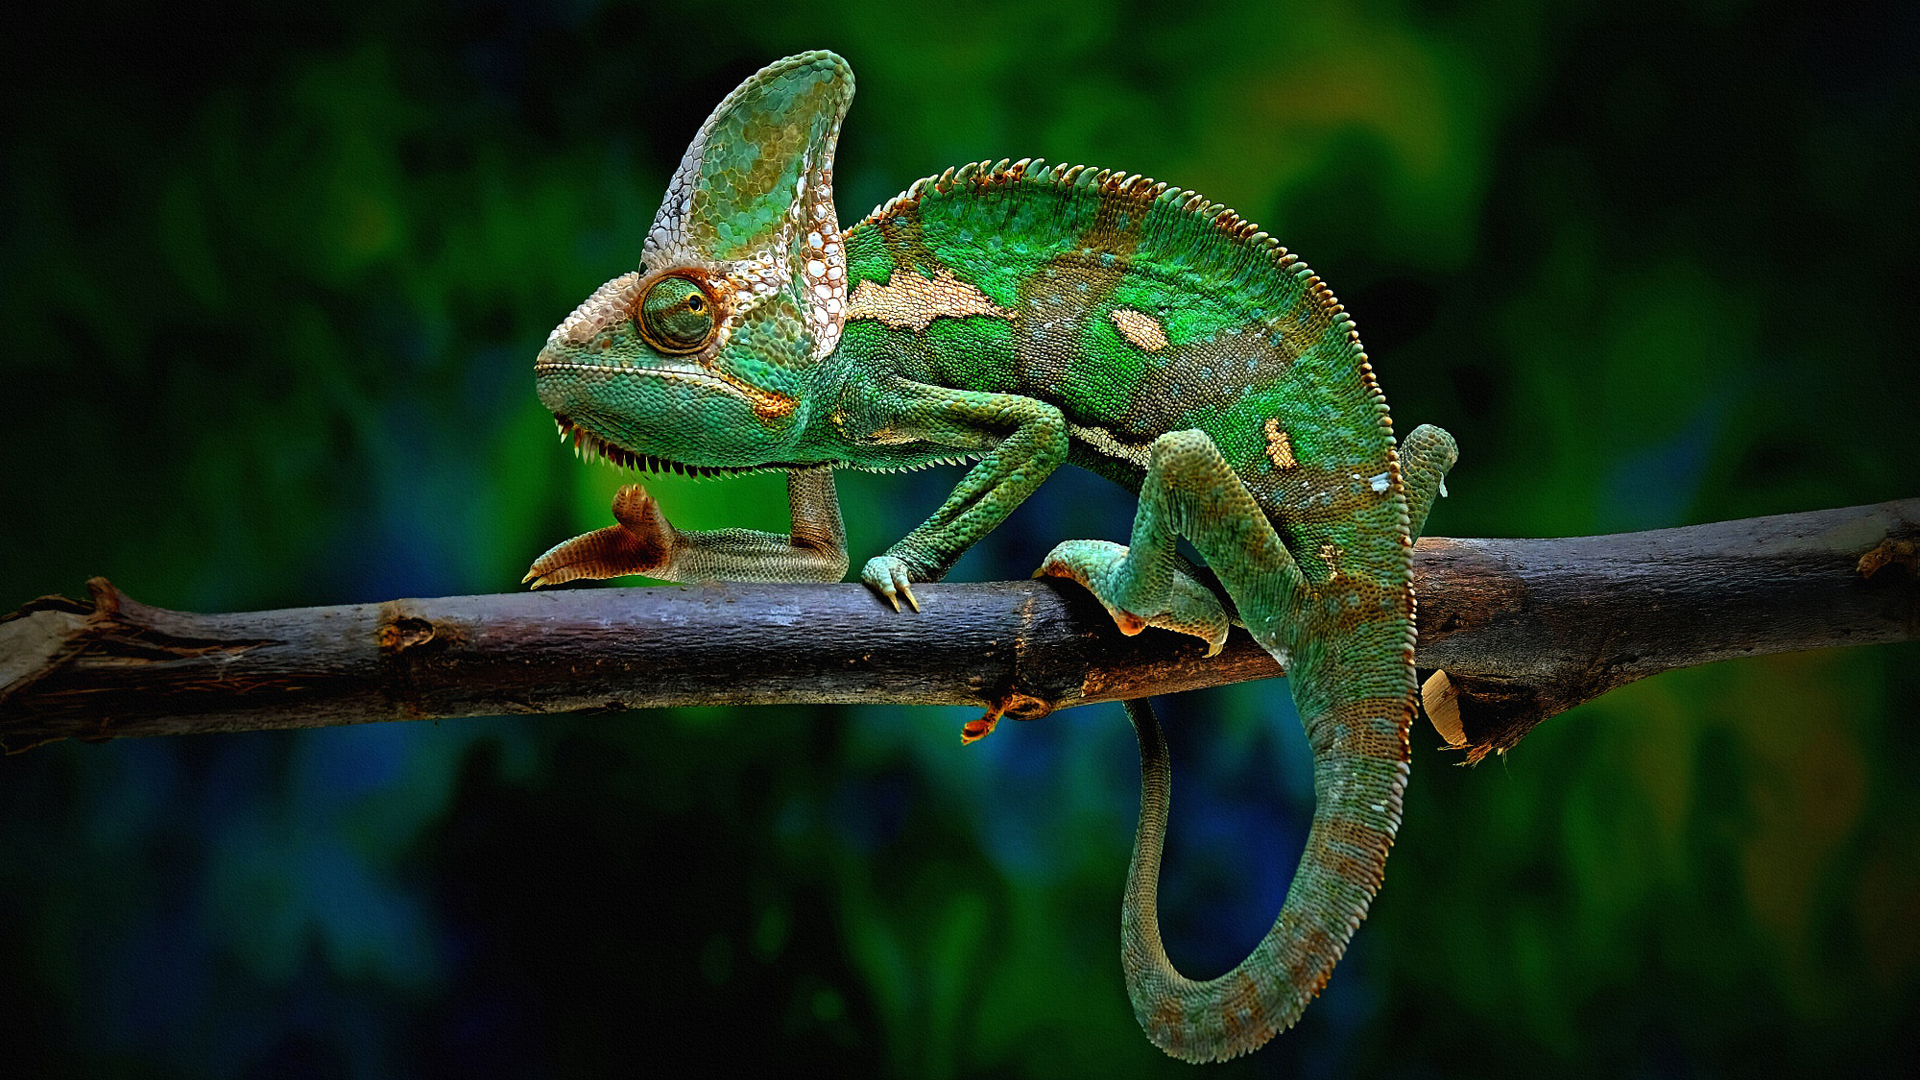 Green Chameleon Is Sitting On Wood Stick In Blur Wallpaper HD Chameleon